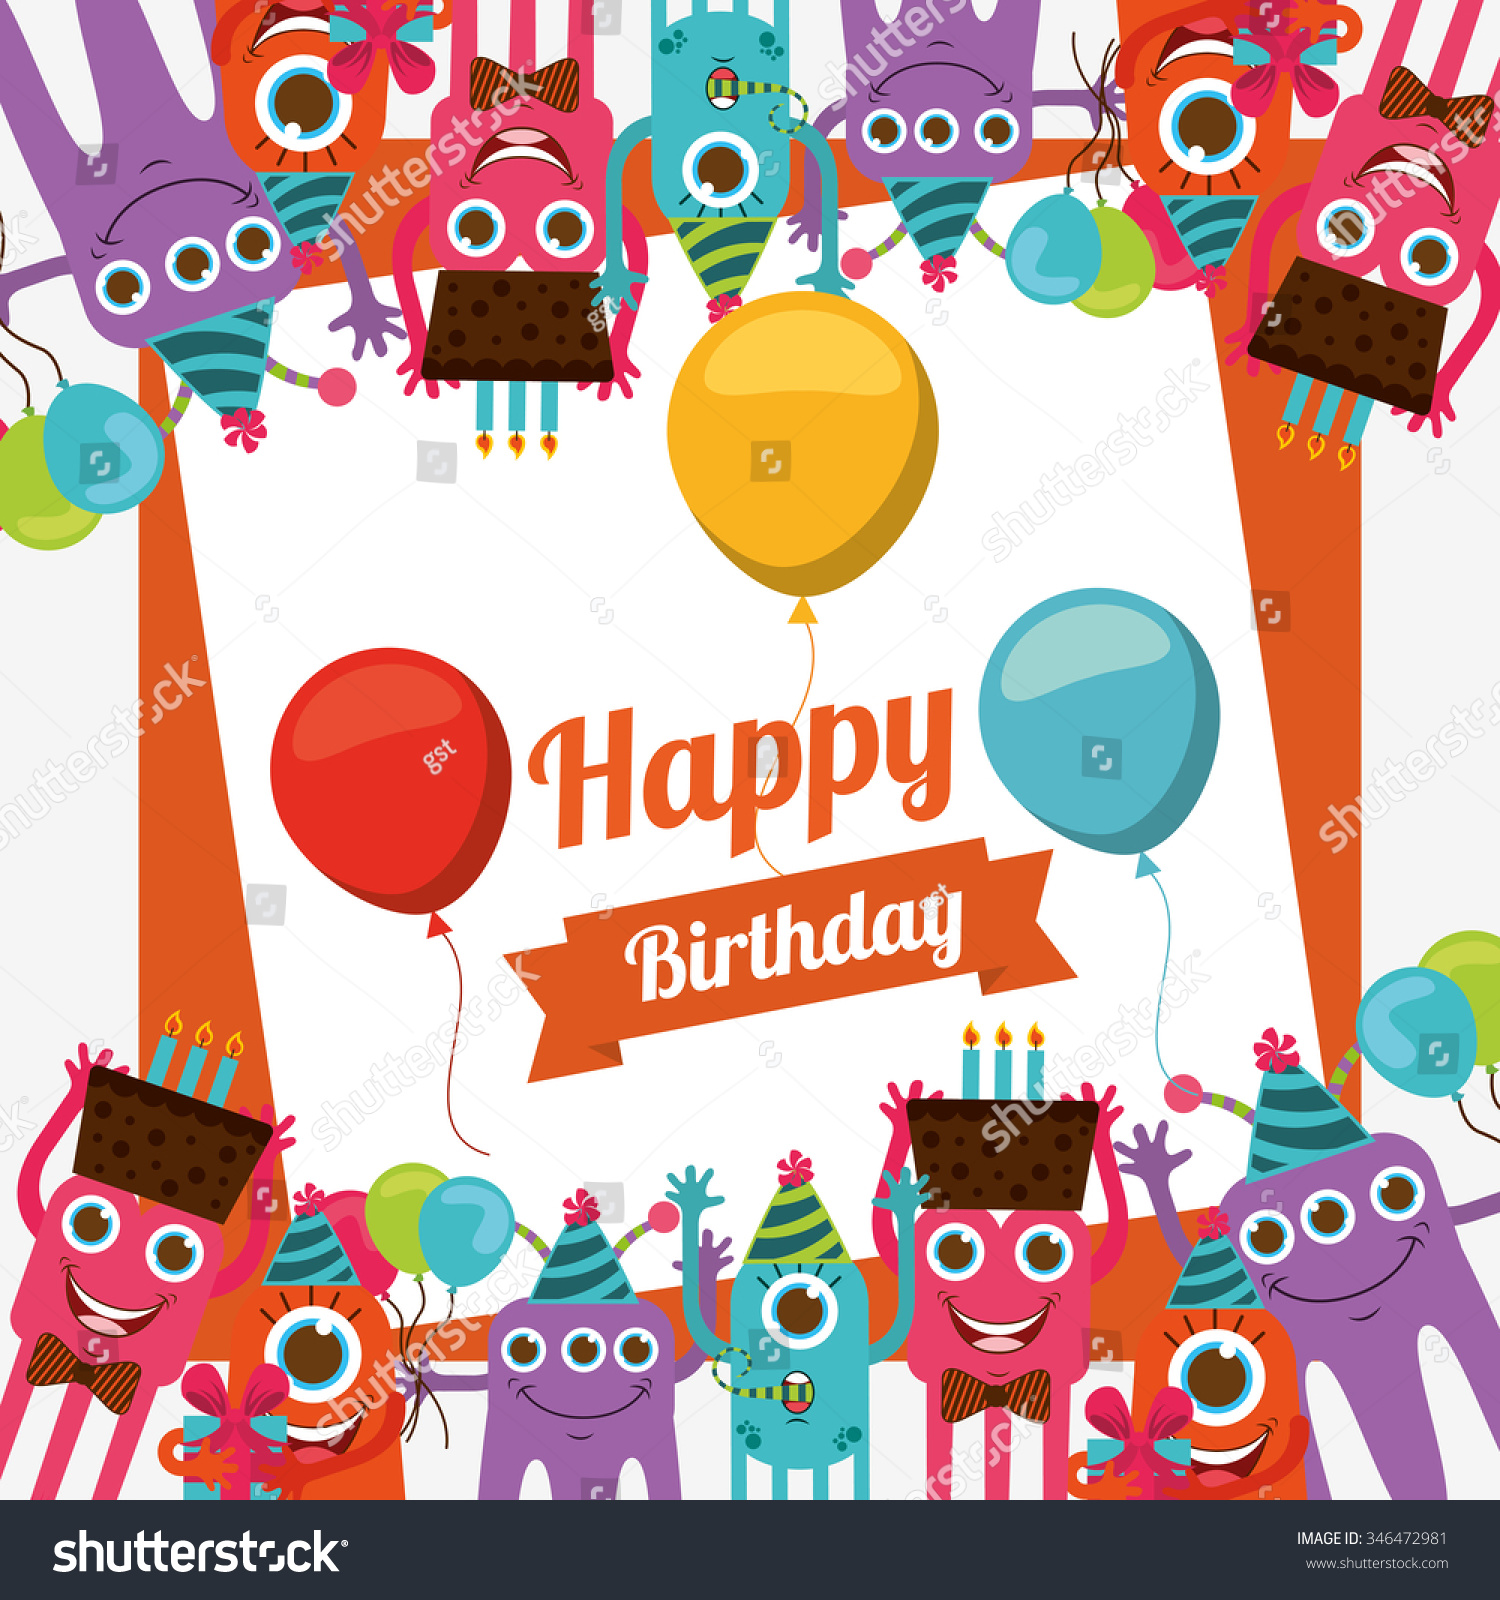 Happy Birthday Card Design, Vector Illustration Eps10 Graphic ...